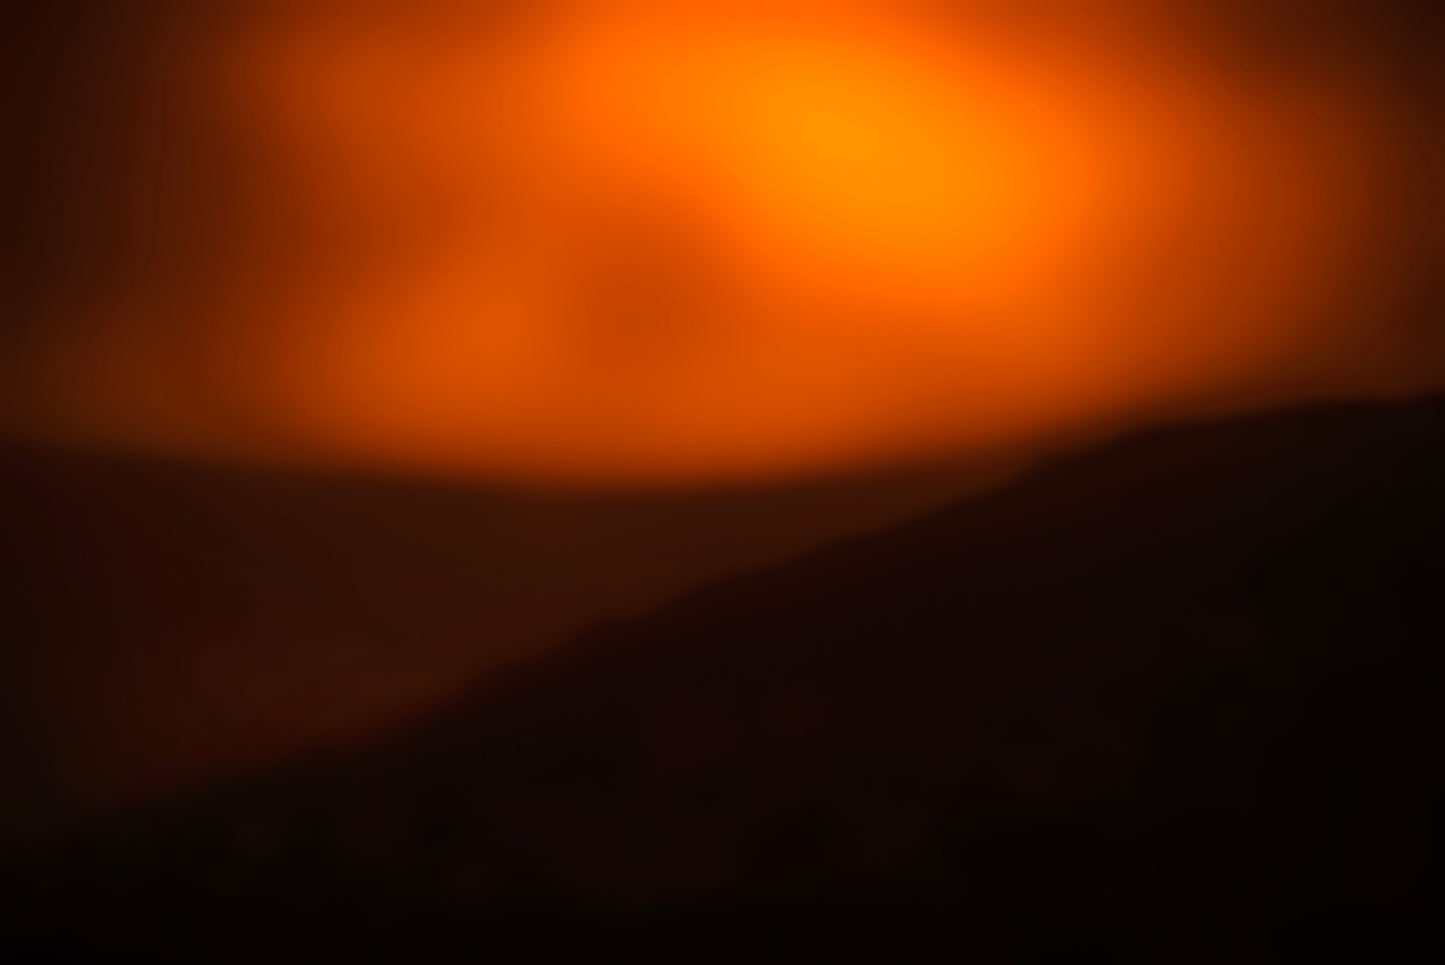 photo of orange haze in sky over shallow mountains